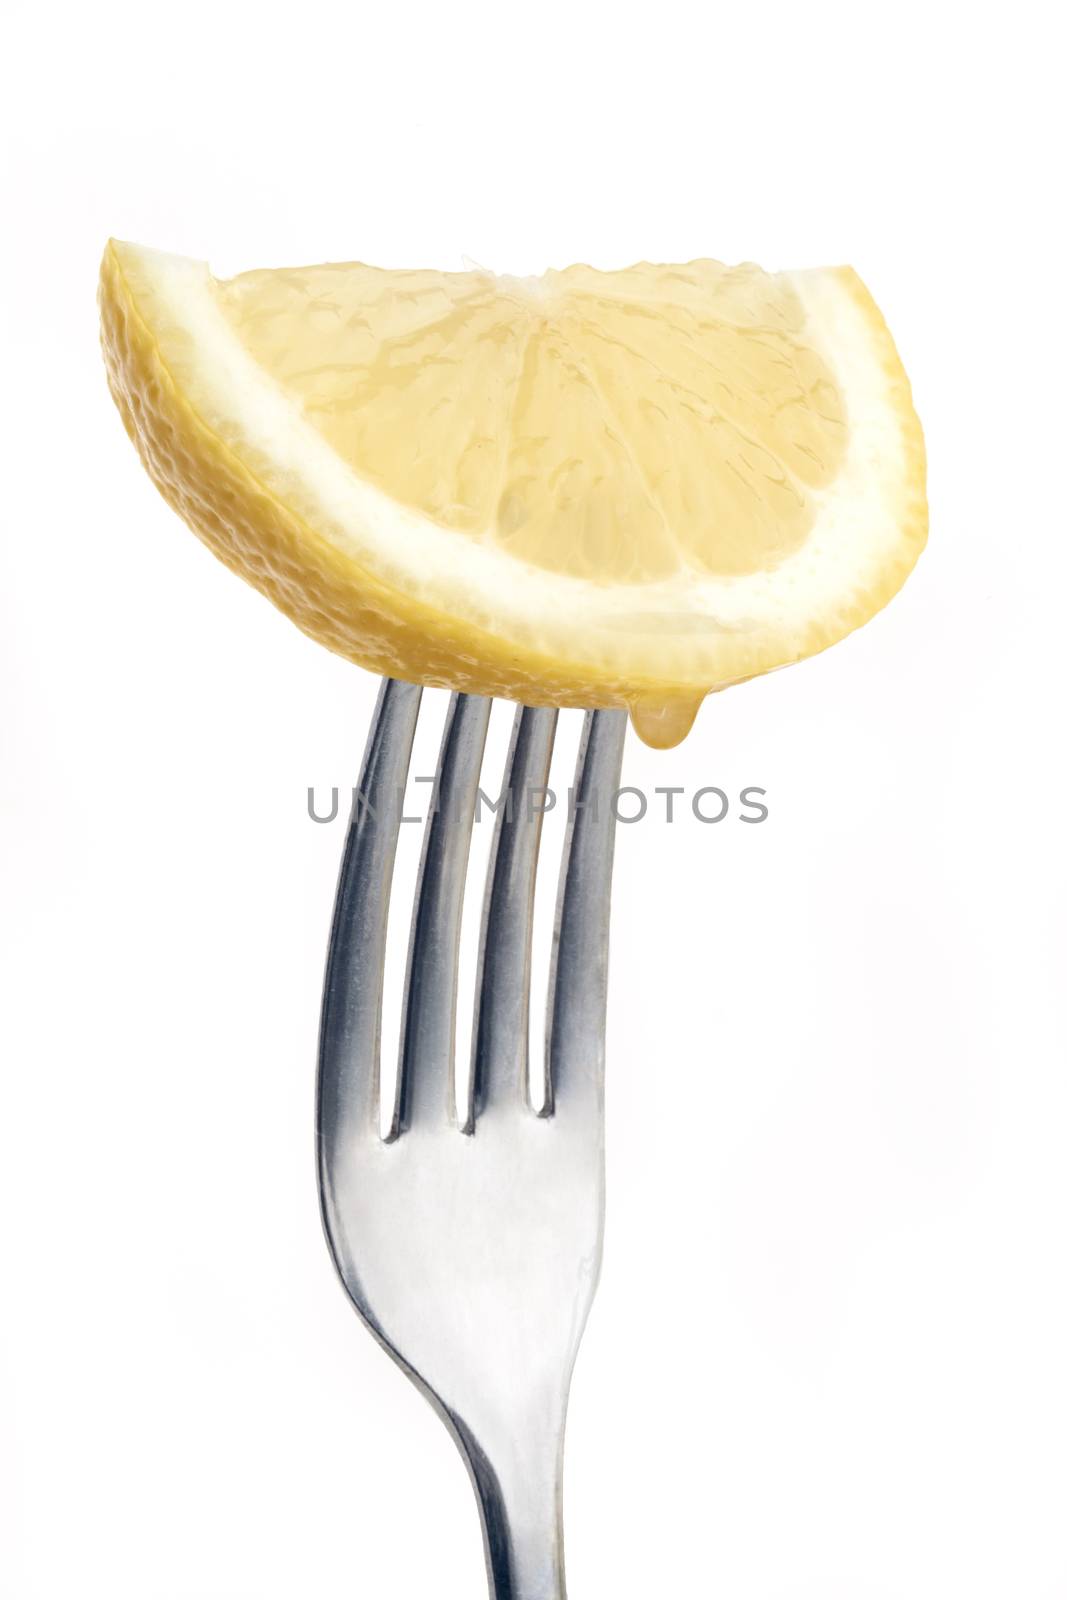 Lemon on fork by gemphotography